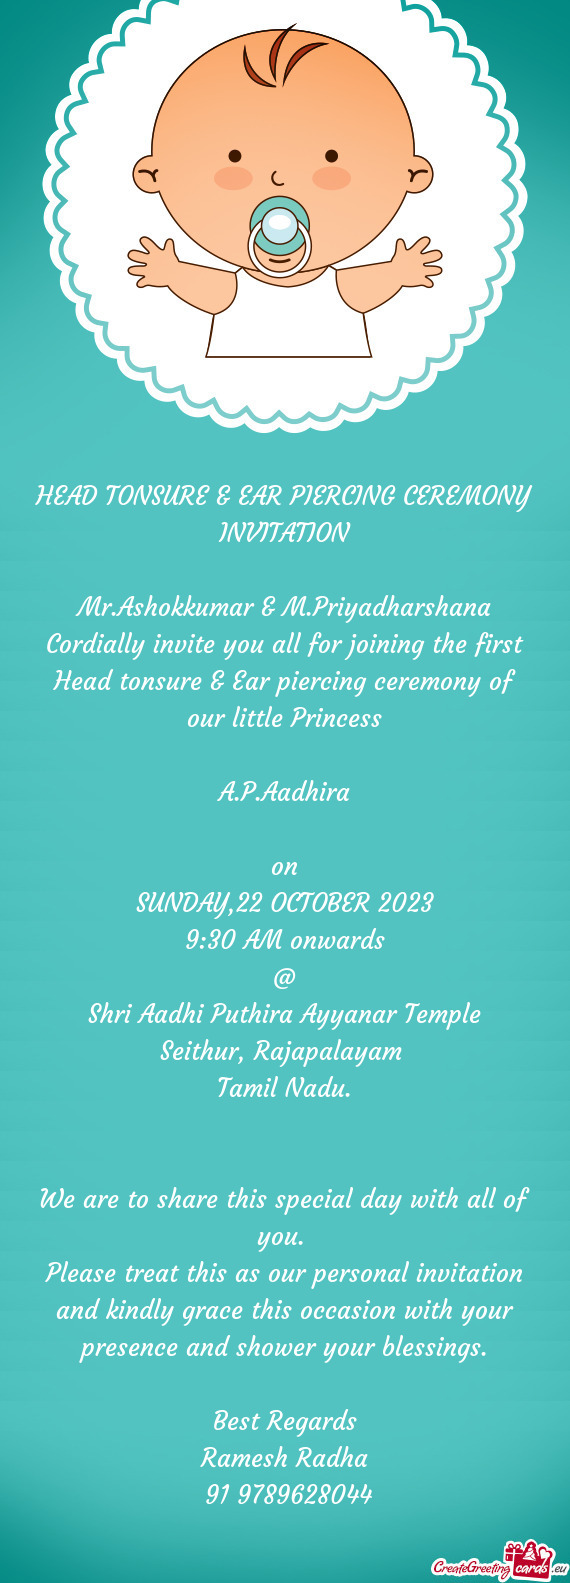 Mr.Ashokkumar & M.Priyadharshana Cordially invite you all for joining the first Head tonsure & Ear p